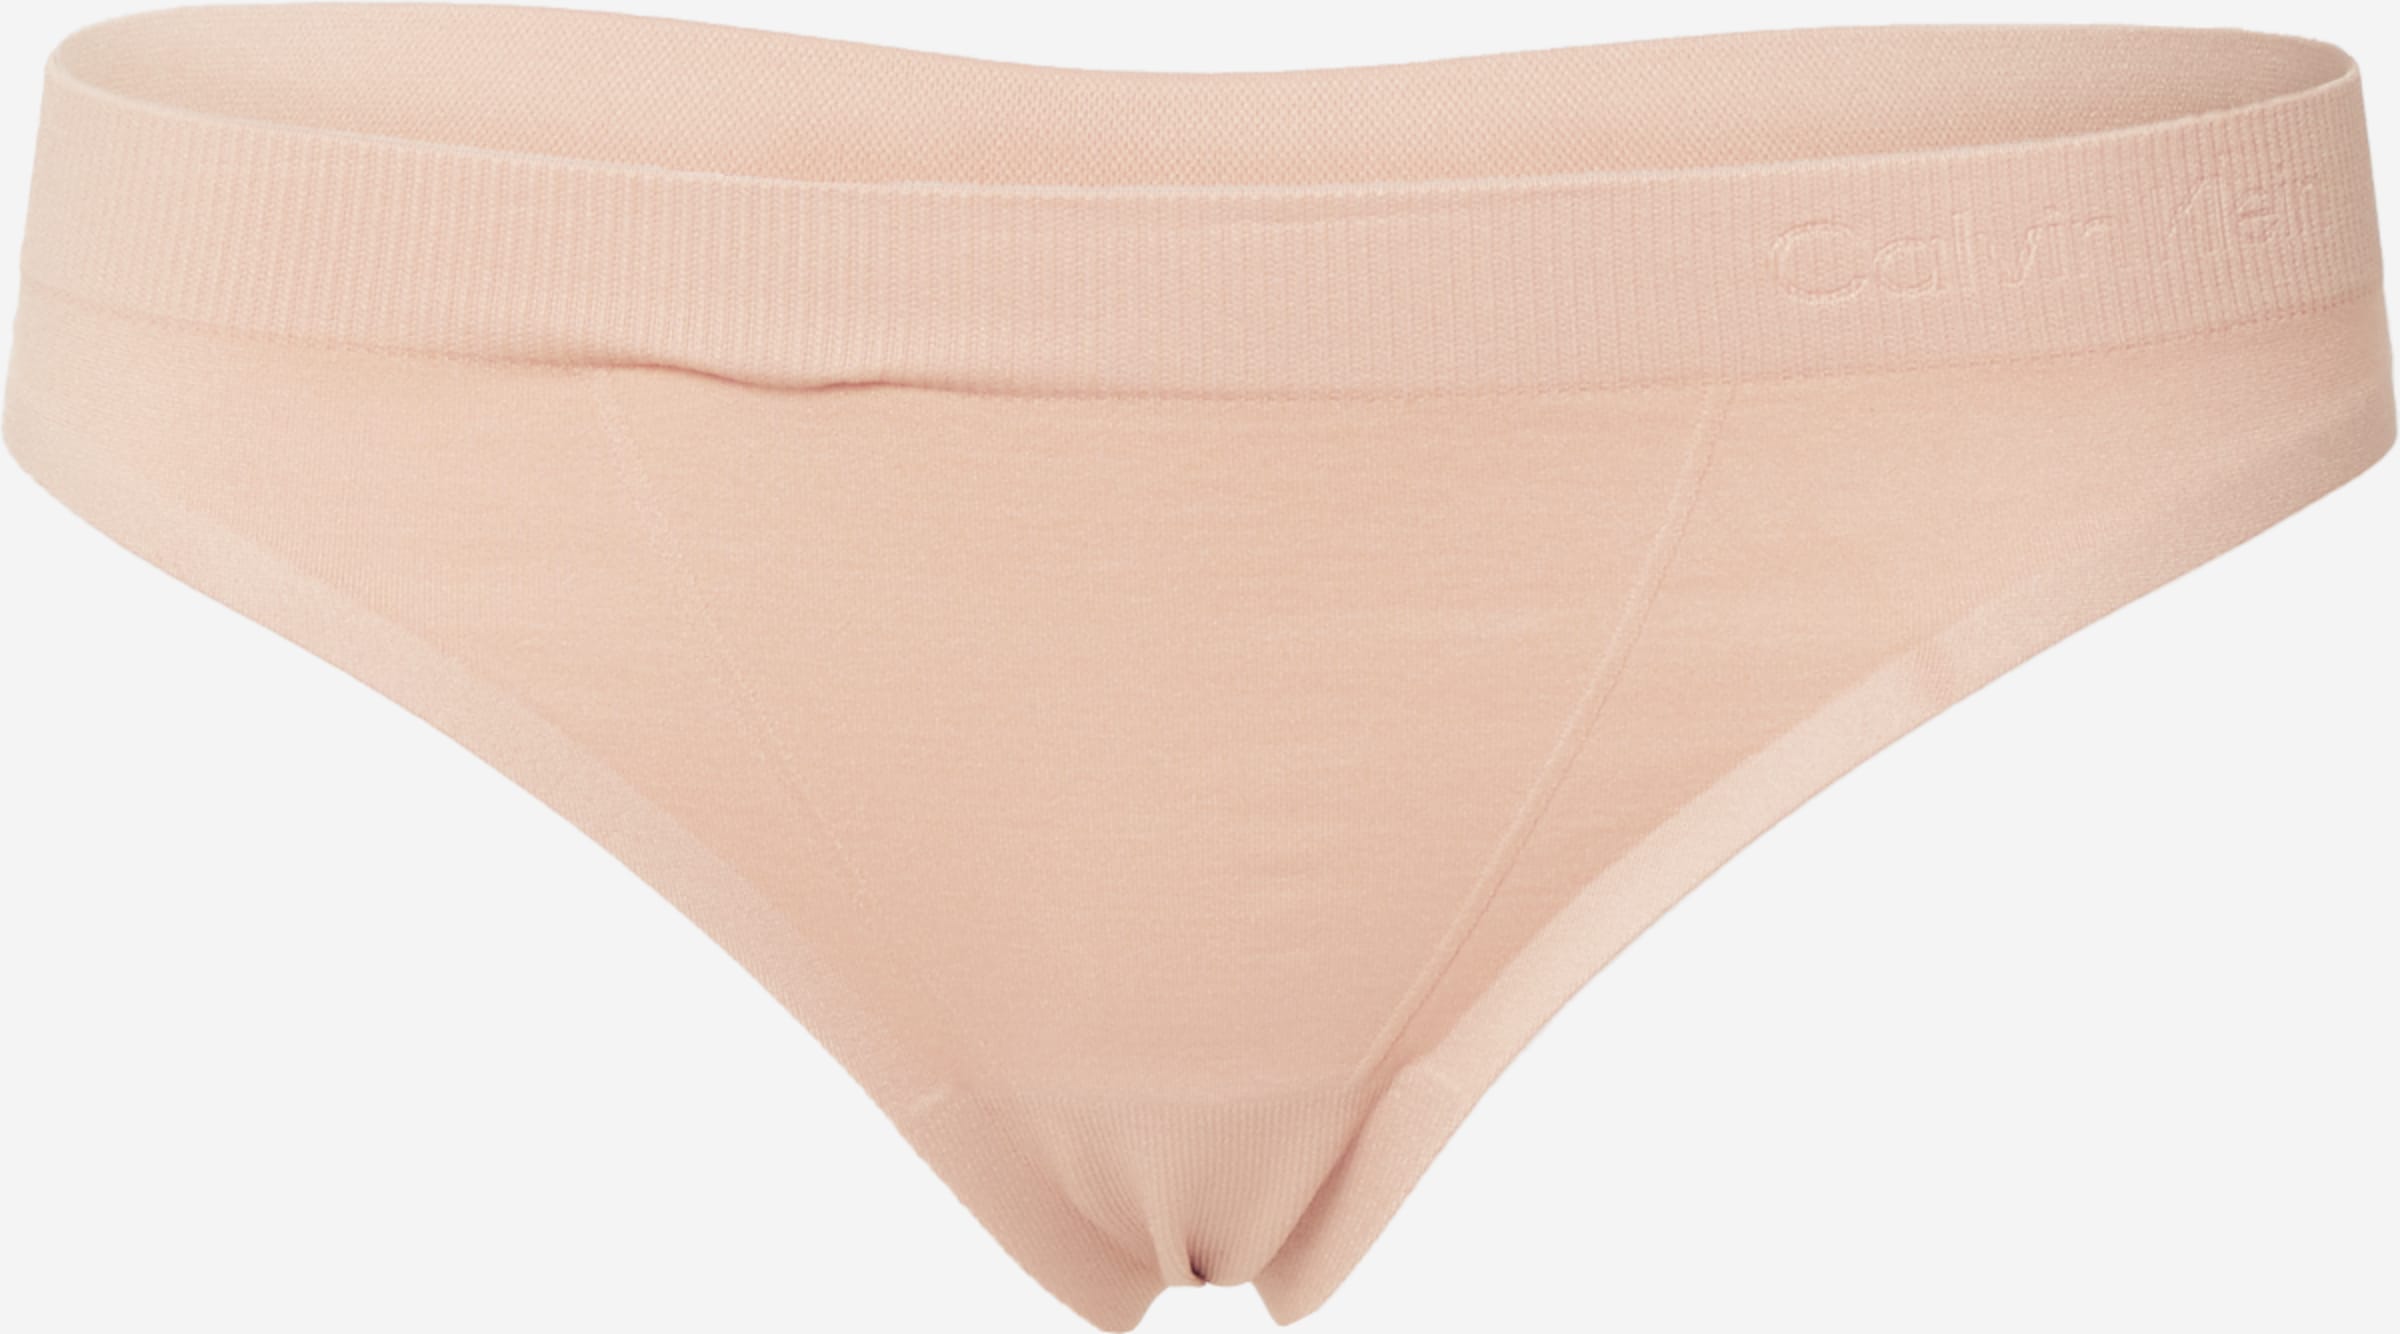 Calvin klein underwear seamless bikini + FREE SHIPPING